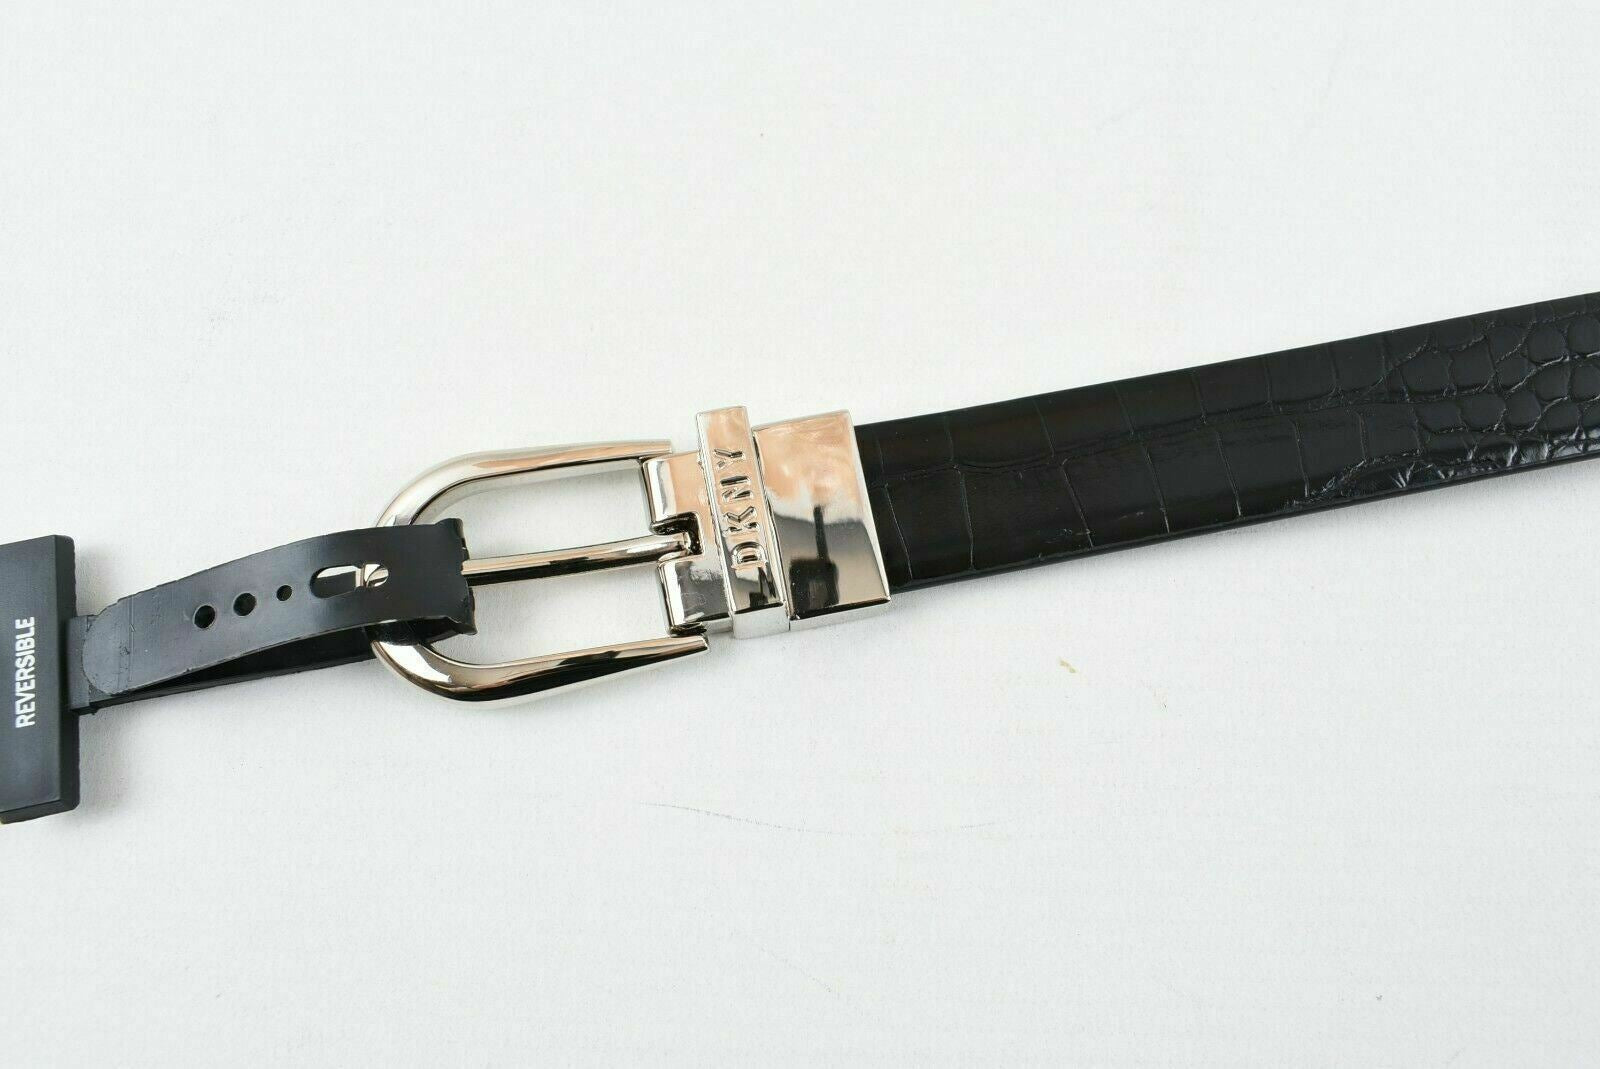 DKNY Women's Faux Leather Reversible Belt, Black Smooth/Moc Crock, size M